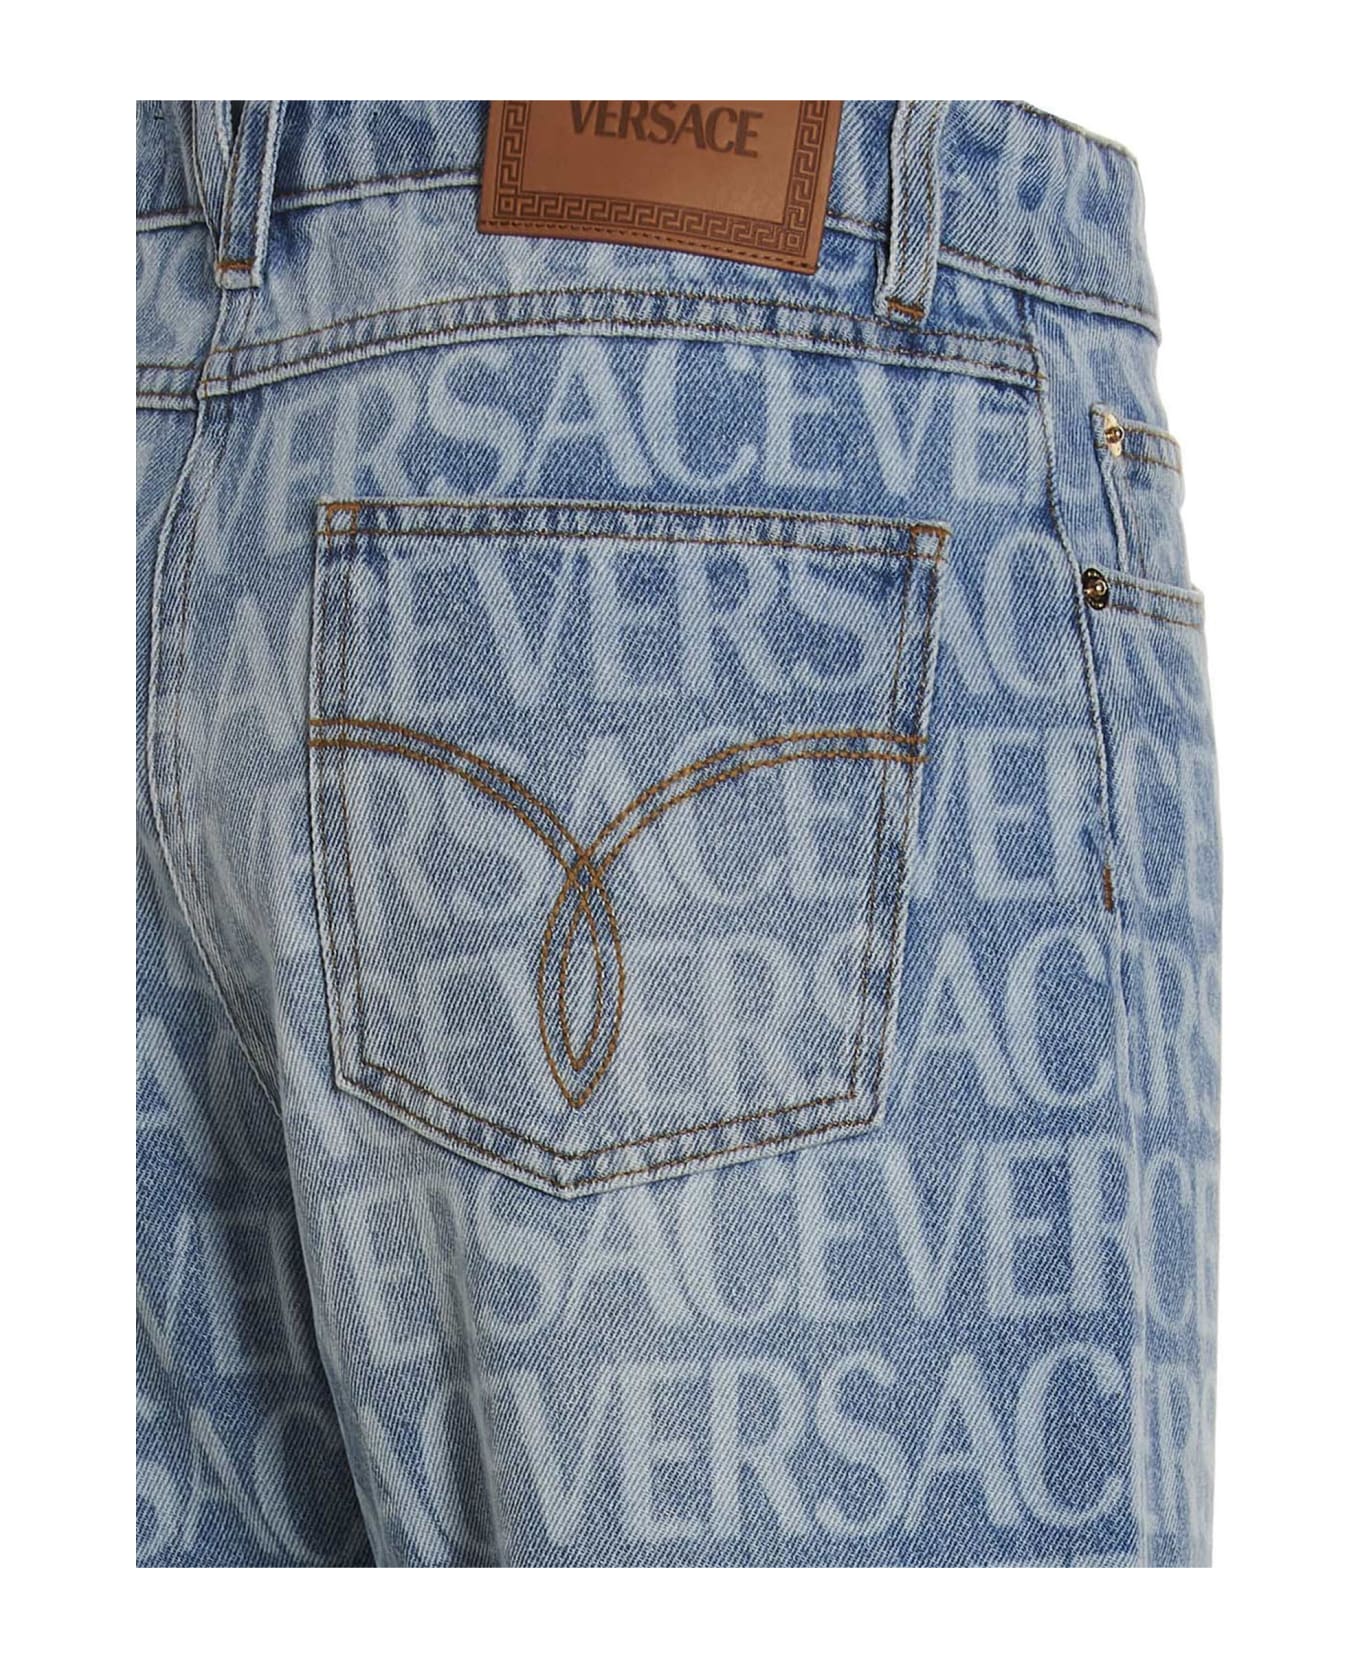 Versace Logo Jeans - Light Blue